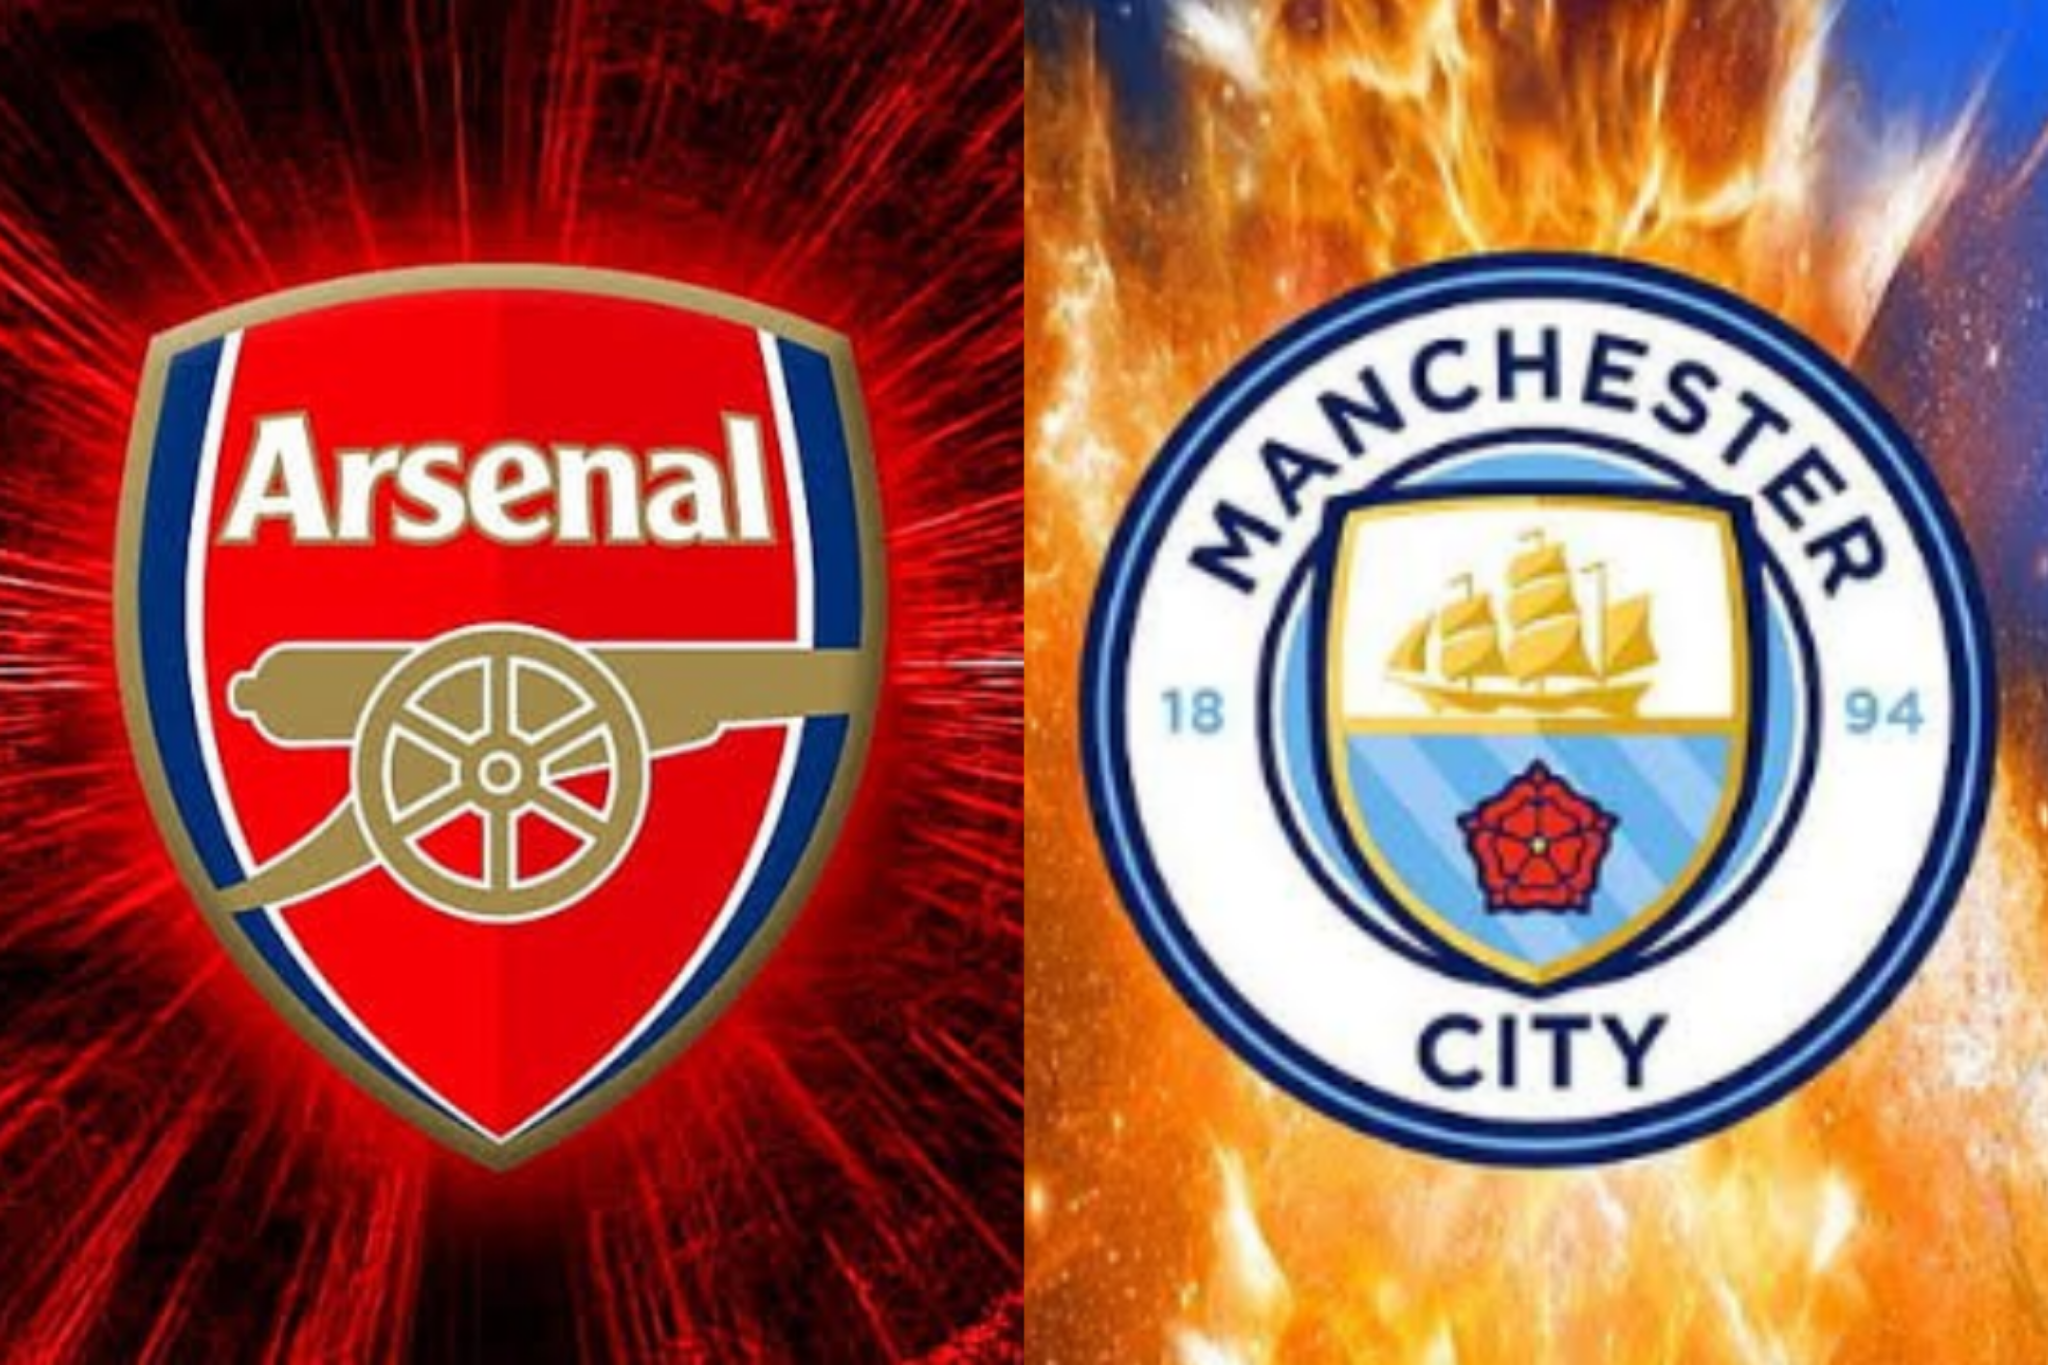 Prediksi Skor Arsenal vs Manchester City di Trofi Community Shield: Line Up, Link Live Streaming, Head to Head